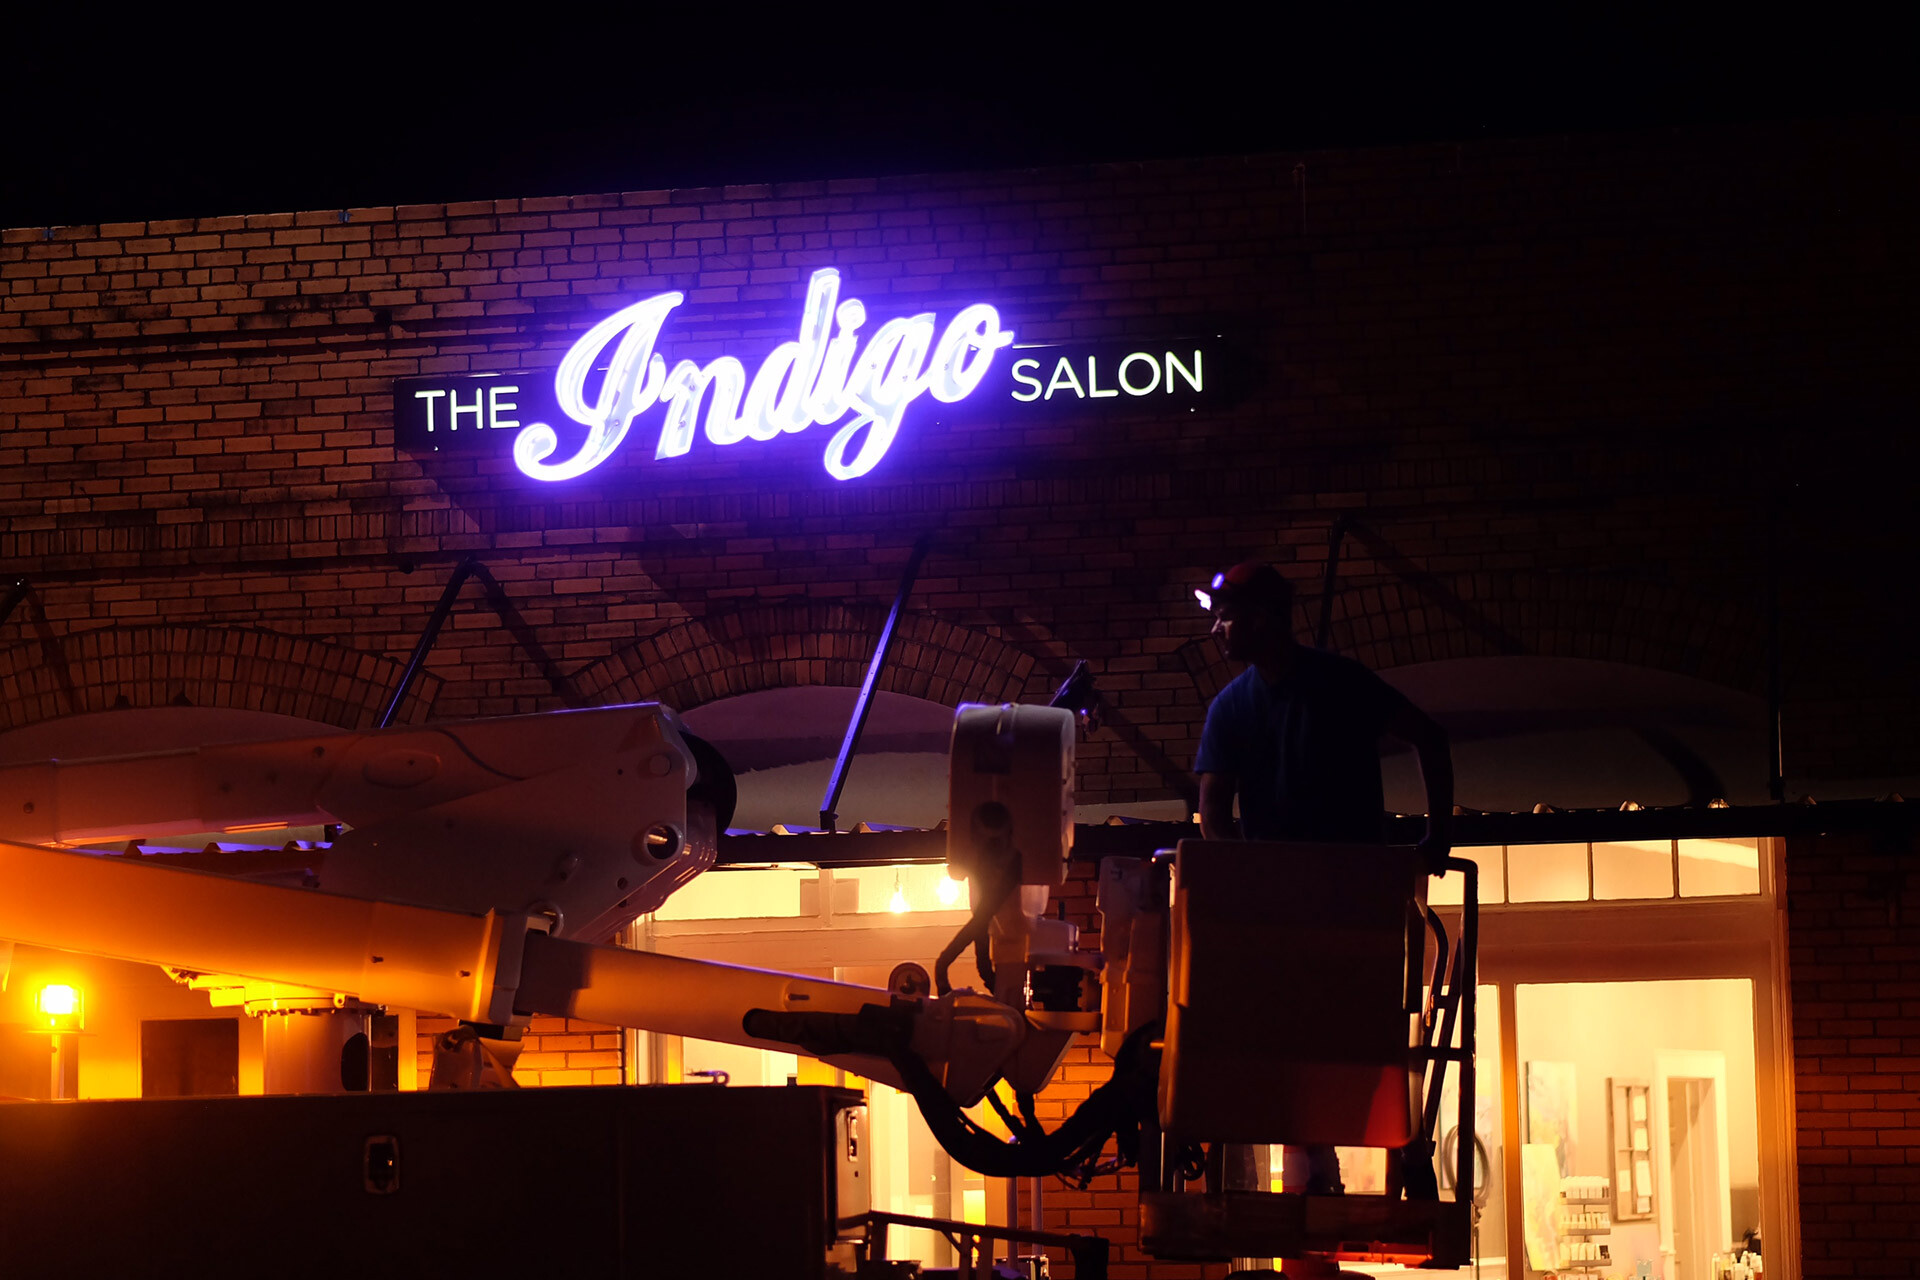 Indigo Salon sign installation